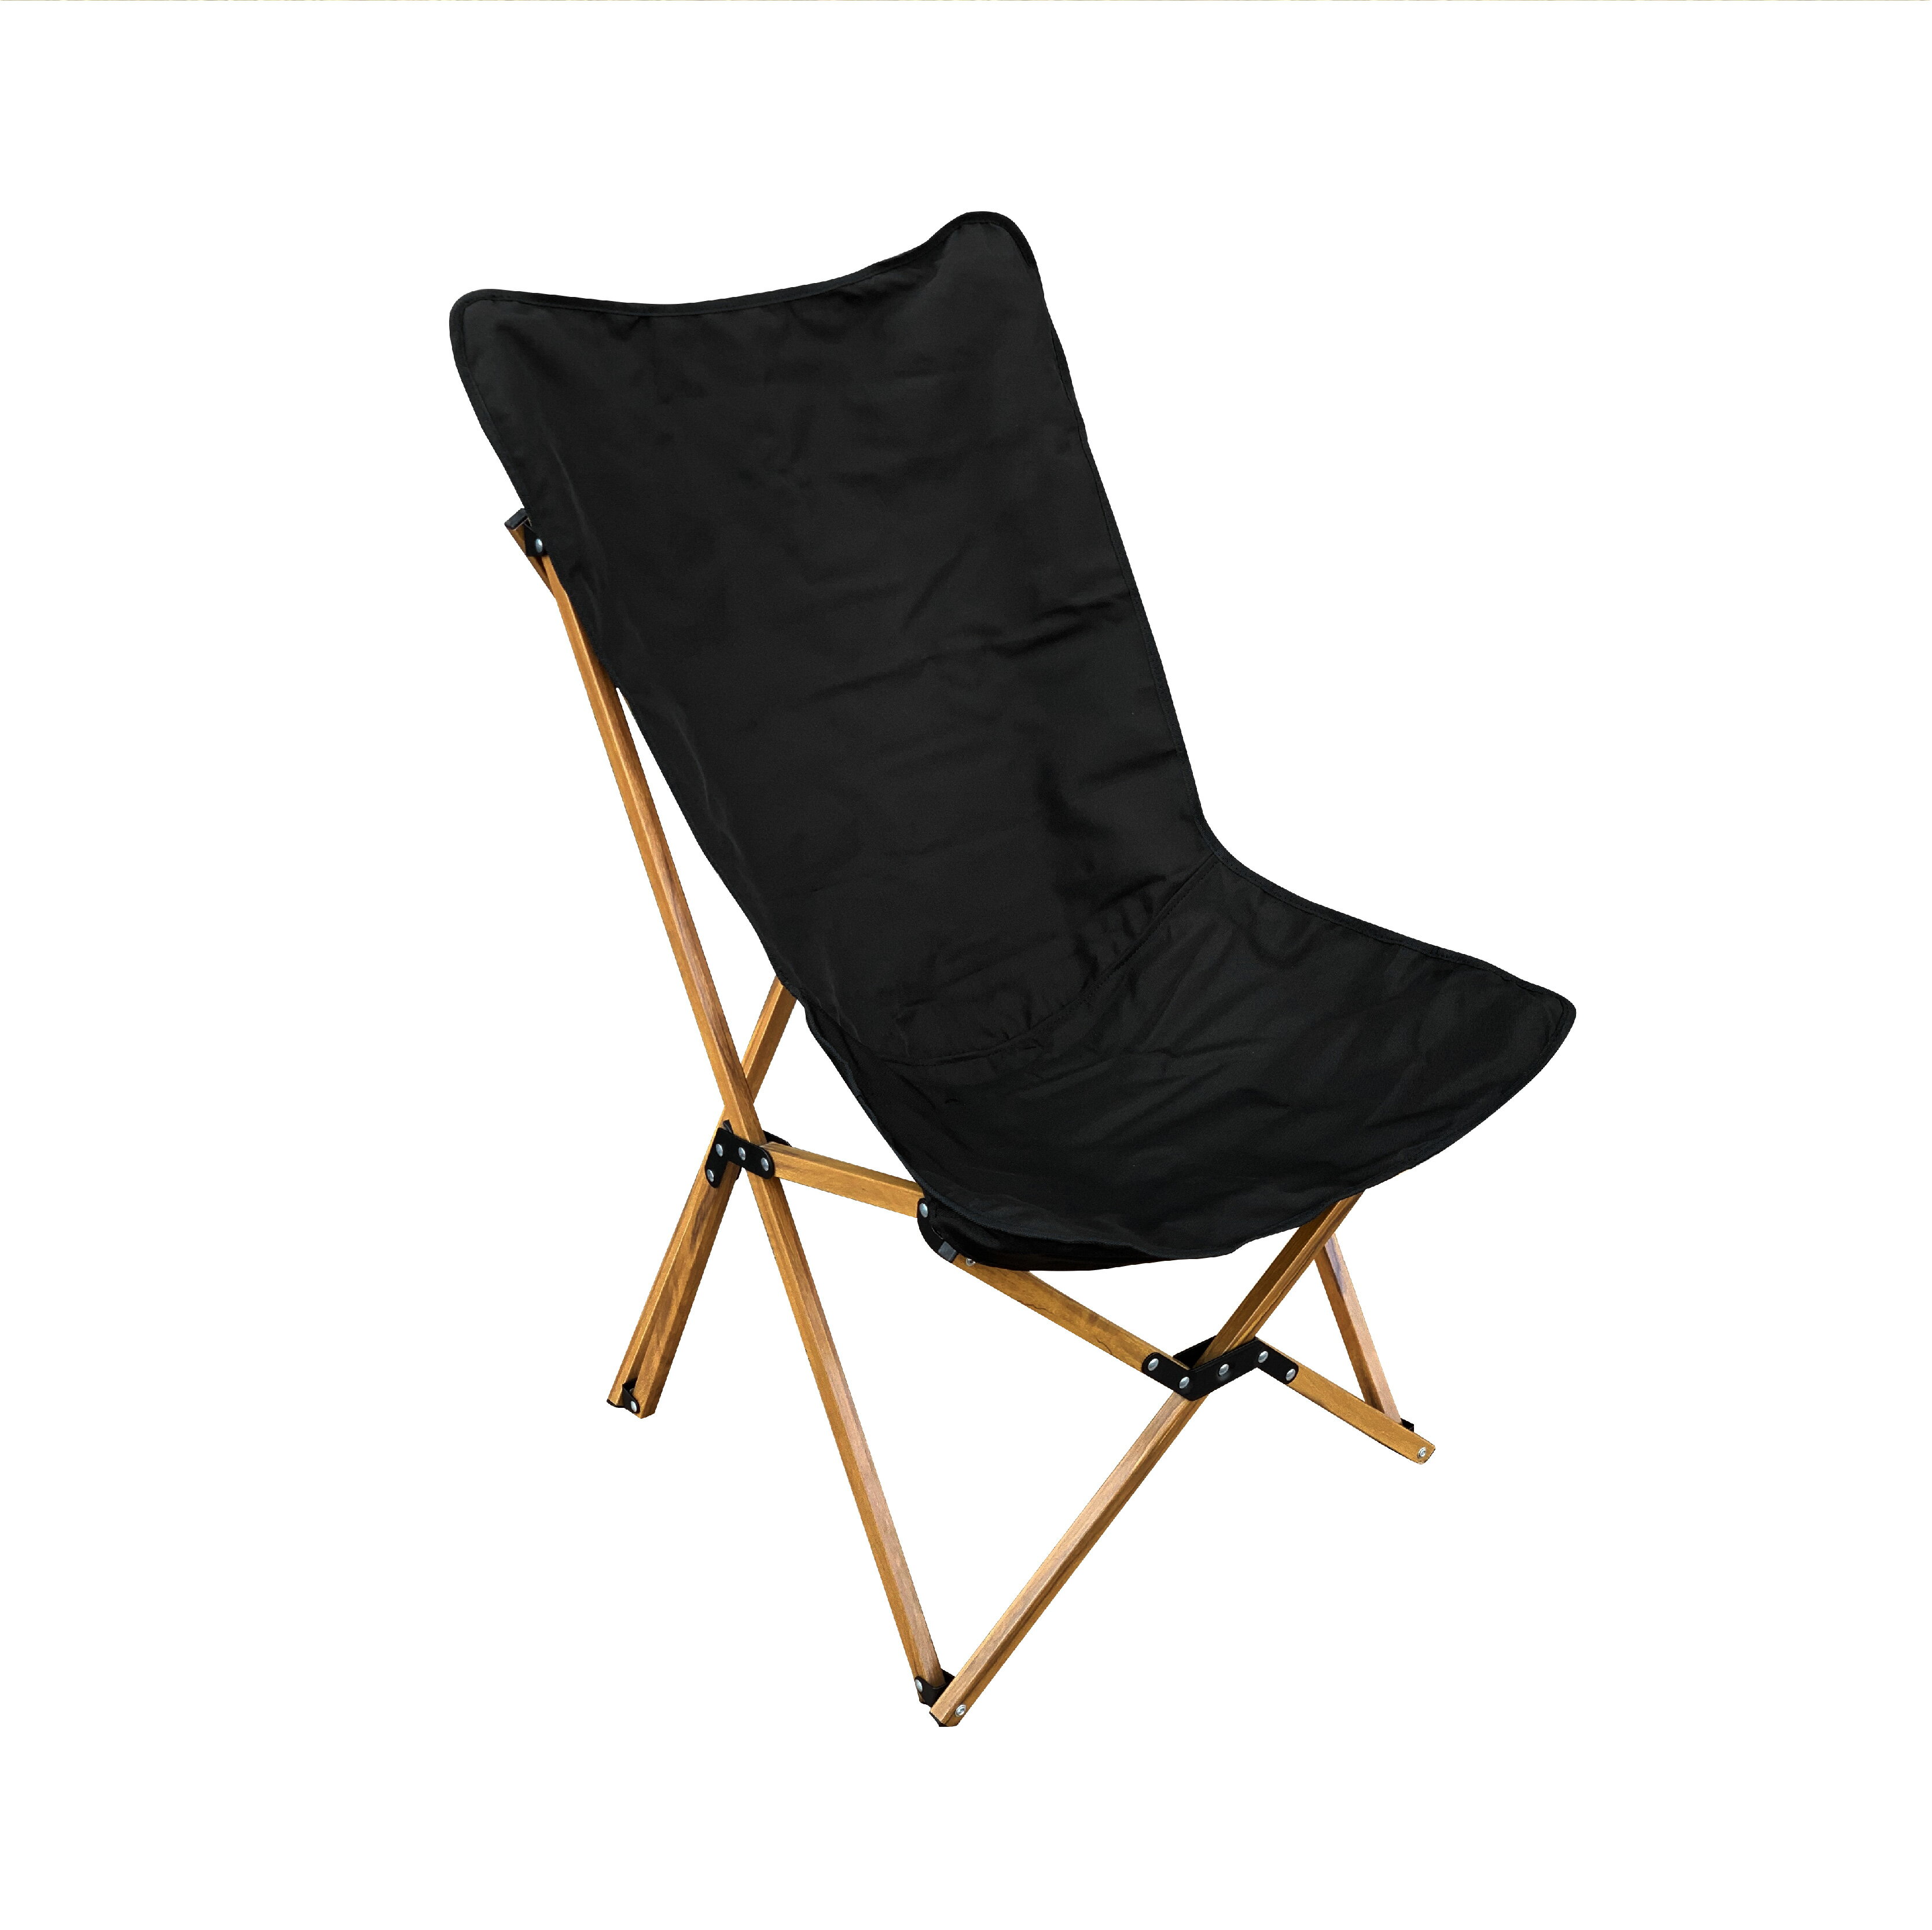 【Treewalker露遊】鋁合金櫸木椅 北歐風折疊椅 露營椅 蝴蝶椅 靠背椅 摺疊椅 野餐椅 露營戶外休閒椅